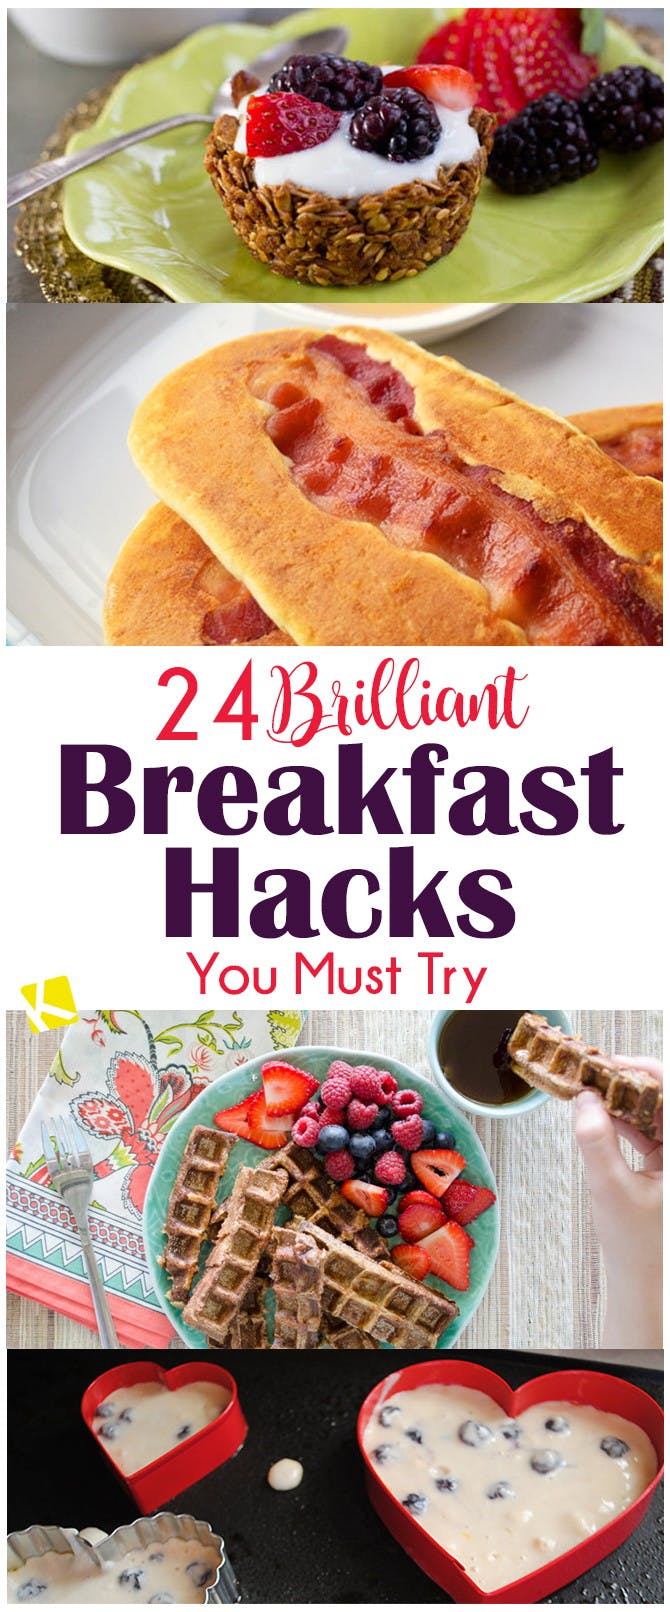 24 Brilliant Breakfast Hacks You Must Try